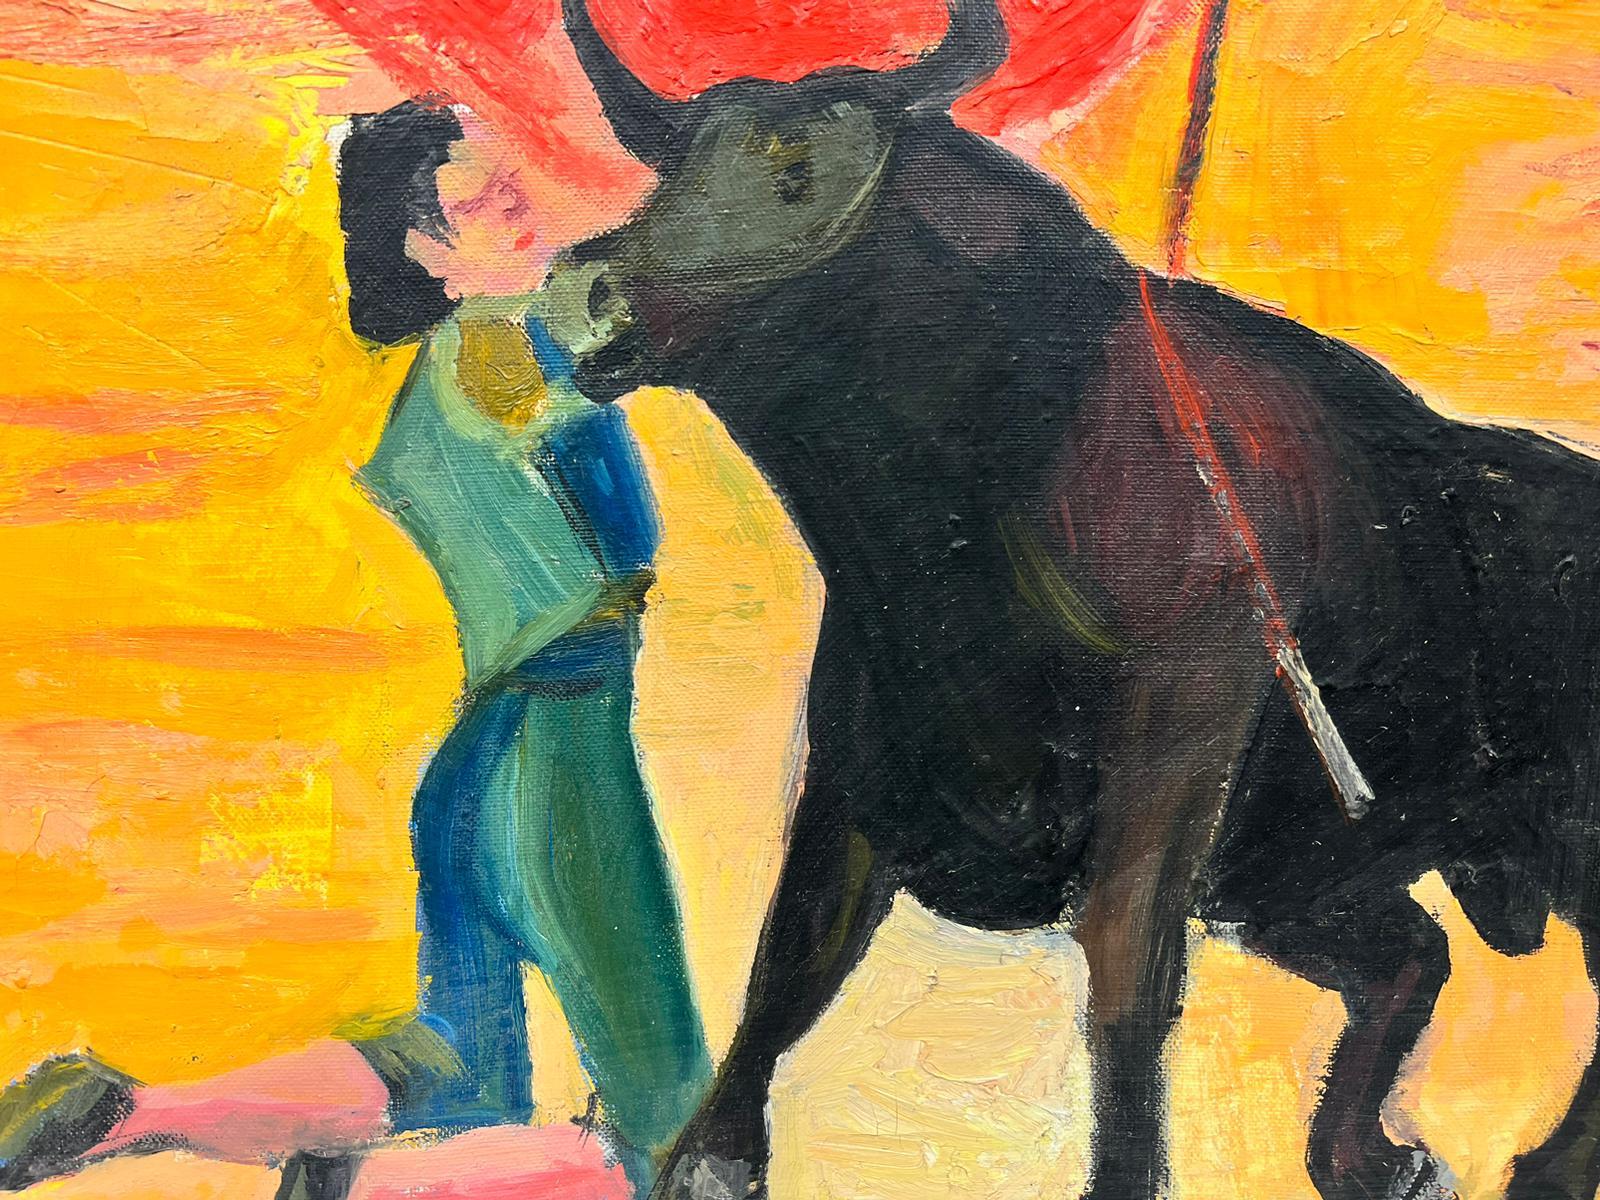 painting on the bullfight